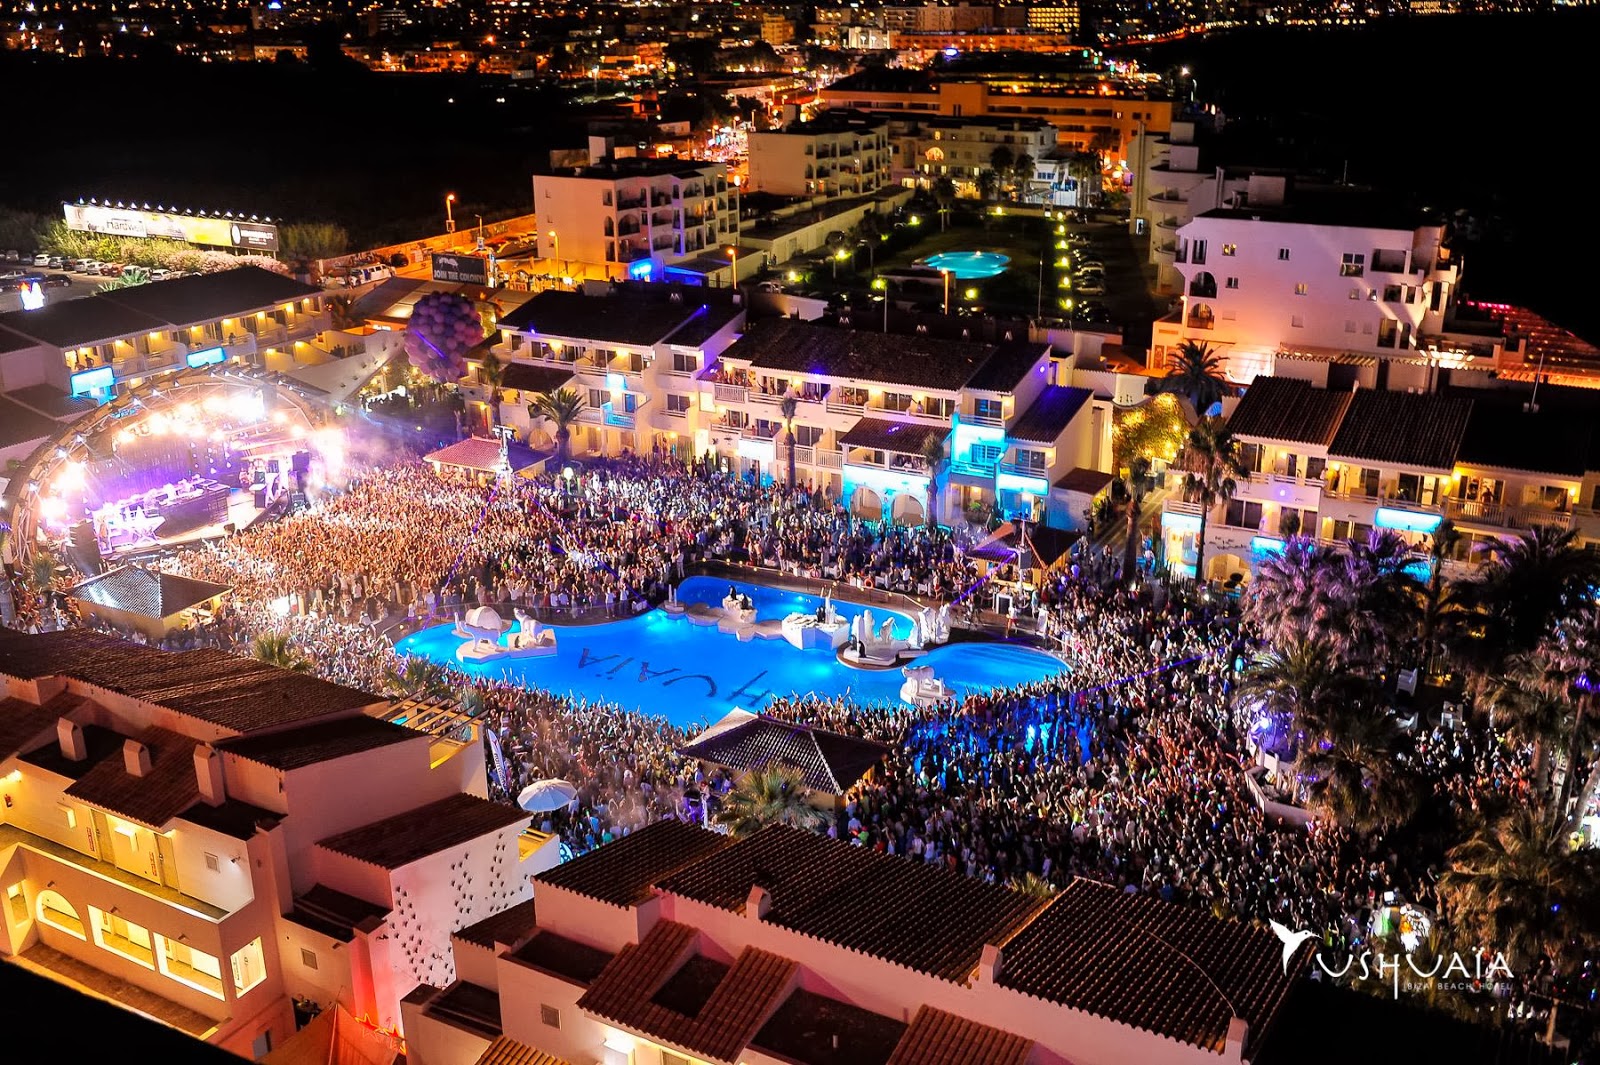 Luxury Life Design: Ushuaïa Beach Hotel in Ibiza - the sexiest island